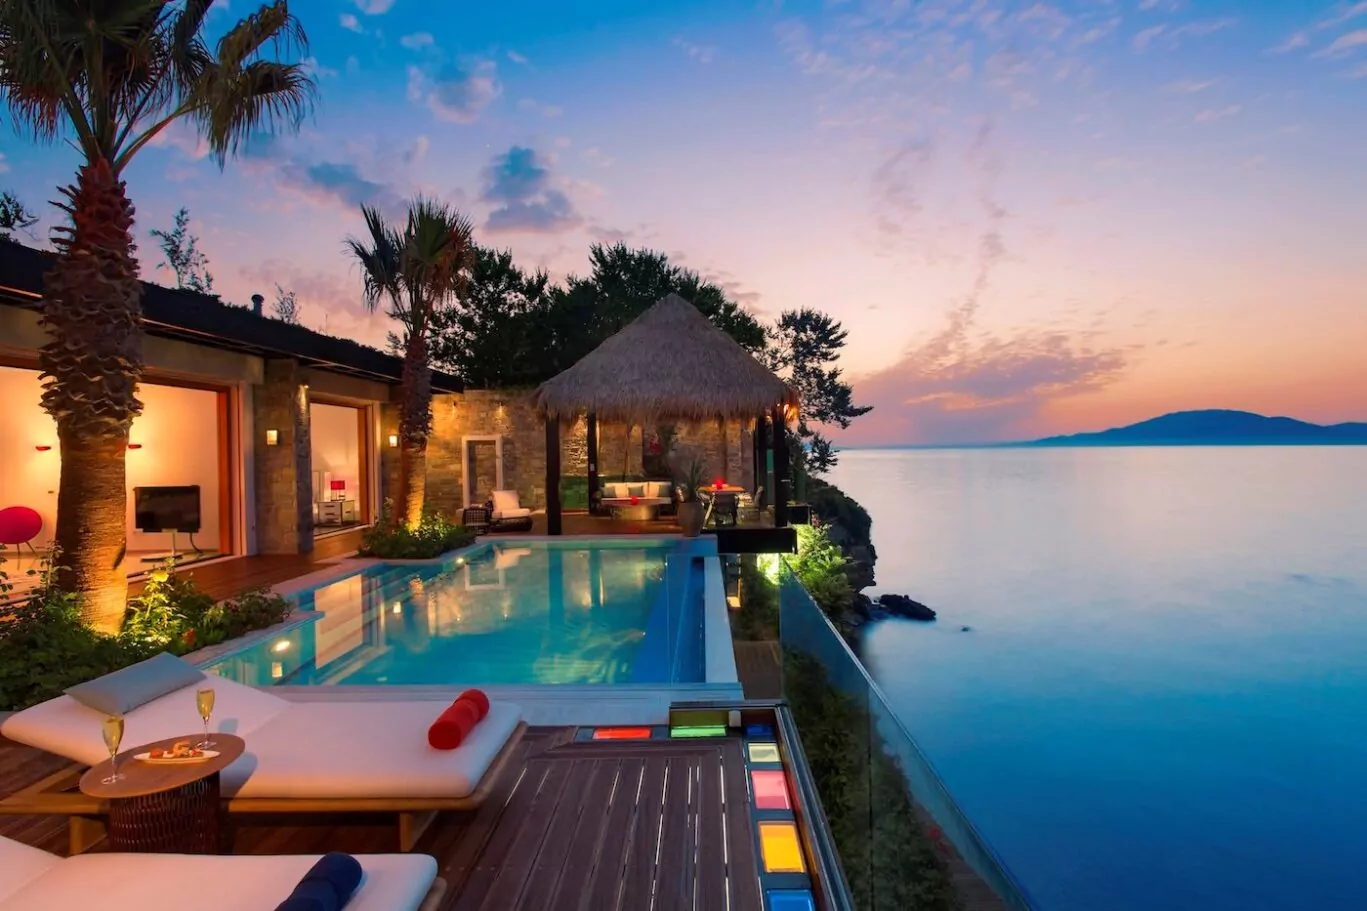 Greece 5-Star Two-bedroom private ultra luxury villa ROYAL INFINITY VILLA with private heated pool and private beach Porto Zante Villas & Spa Zakynthos Island